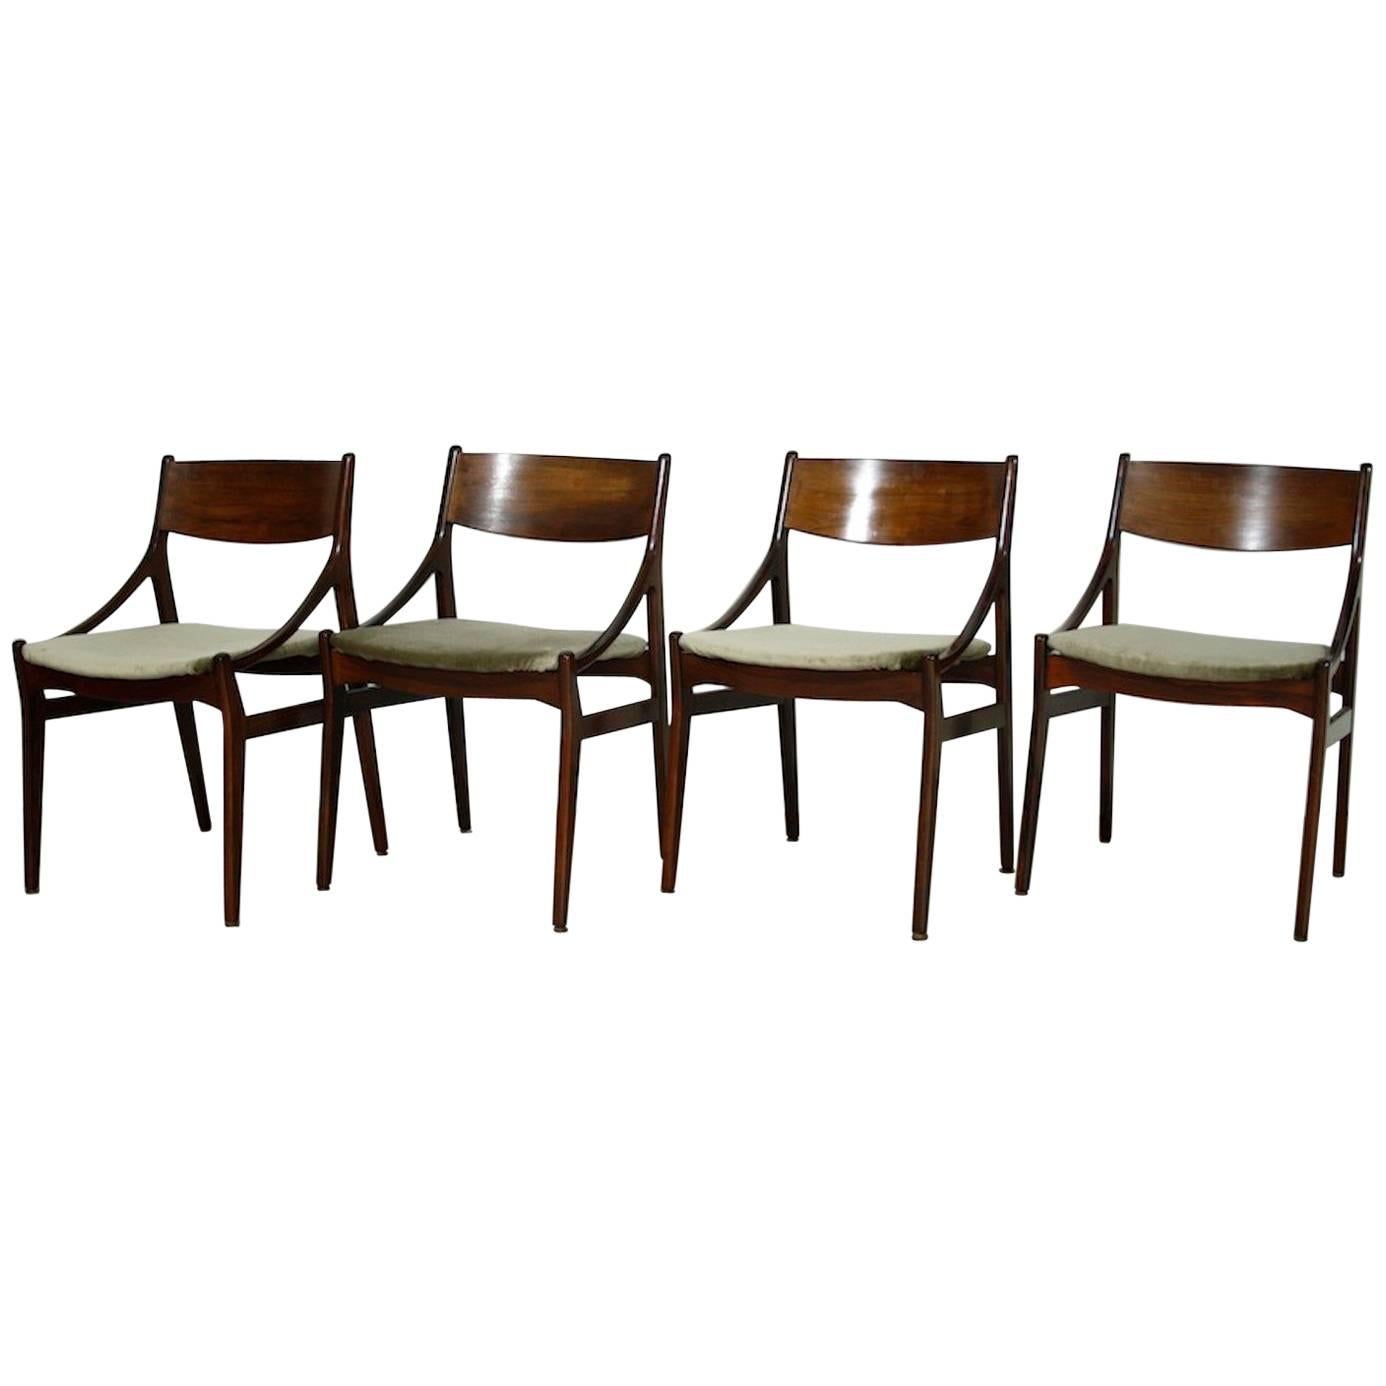 Four Dining Chairs by Vestervig Erikson for Brdr Tromborg Lystrup, Denmark 1960s For Sale